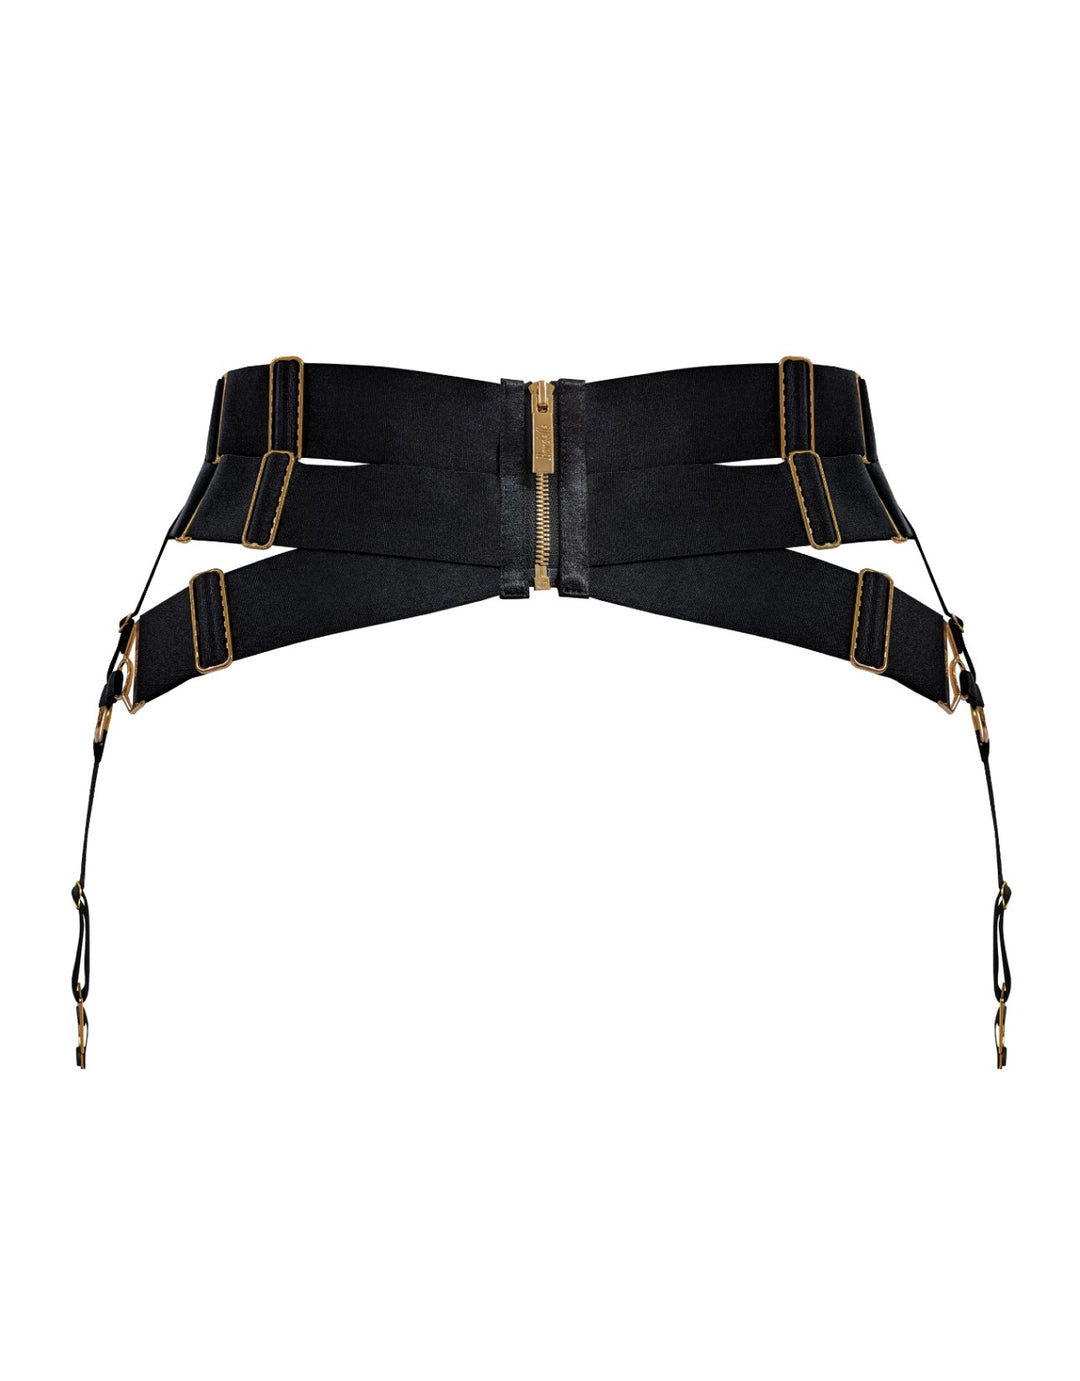 Bordelle Designer Lingerie Aurea Suspender Belt in Black